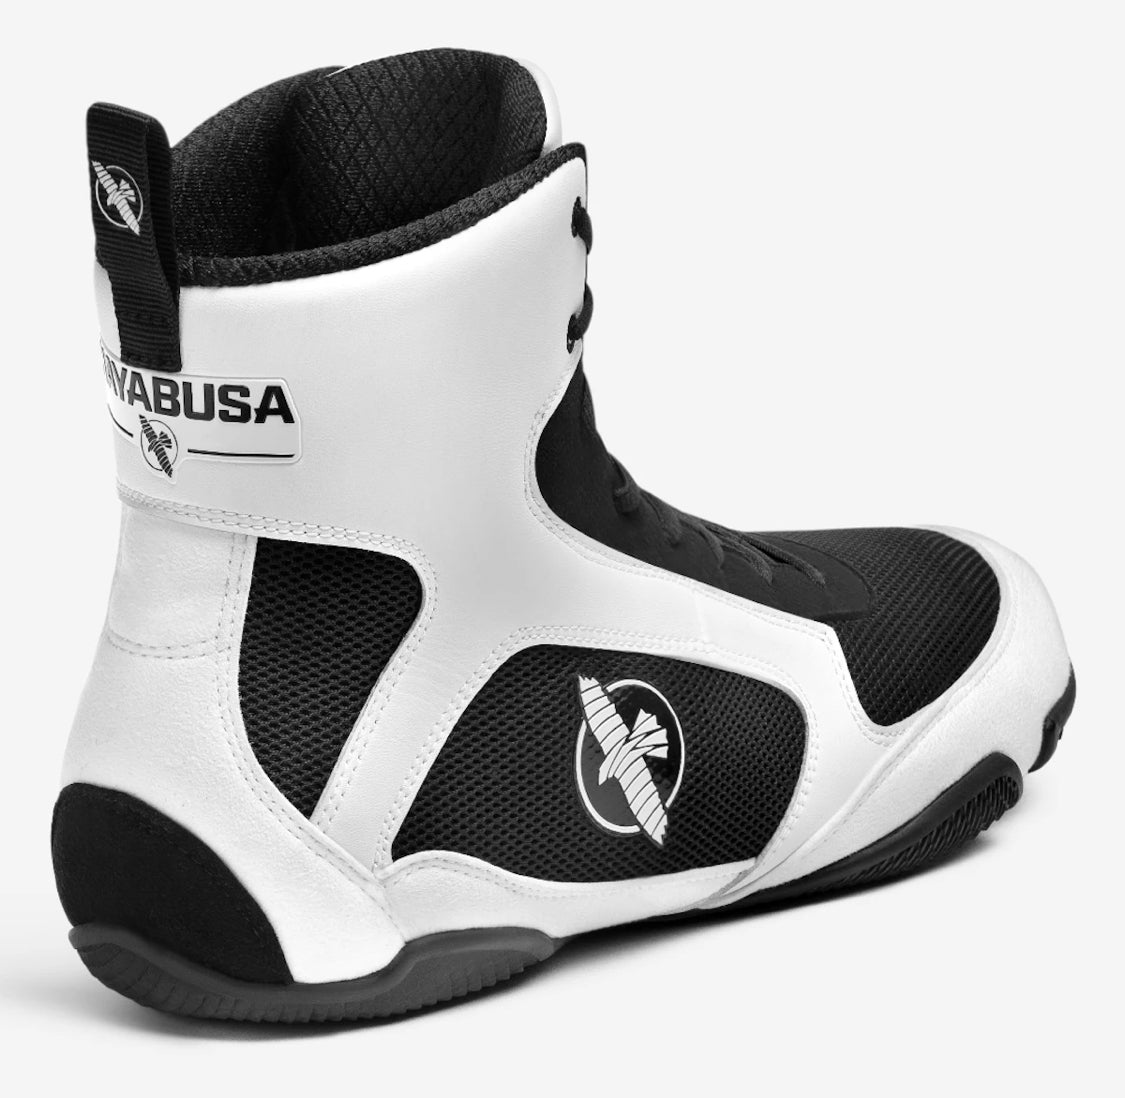 Hayabusa Pro Boxing Shoes